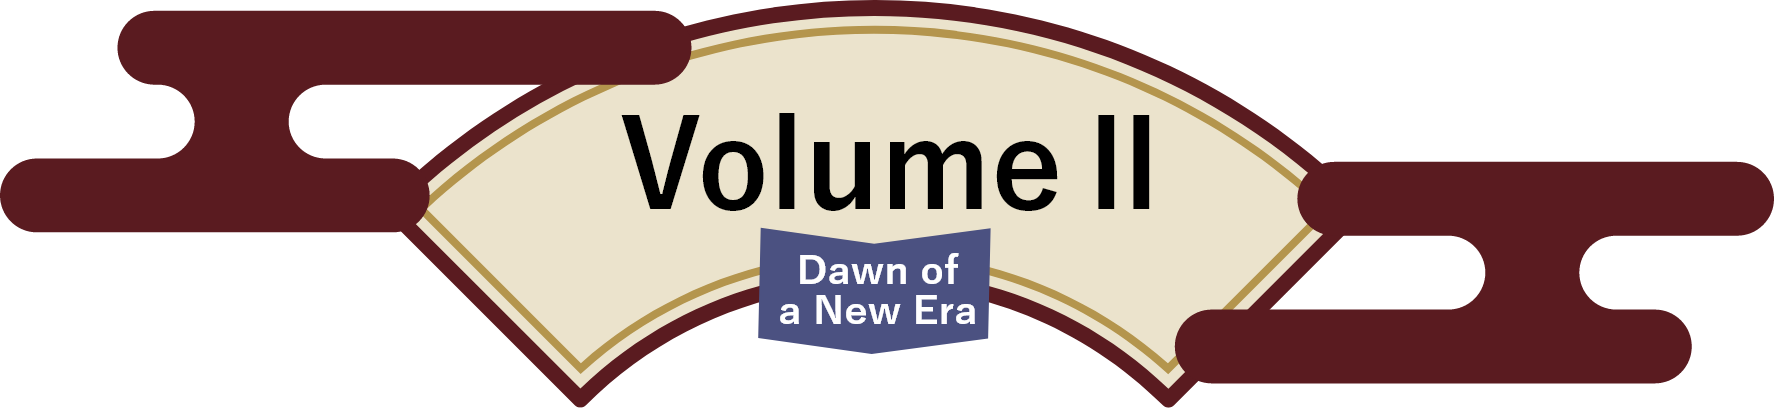 Volume Ⅱ Dawn of a New Era